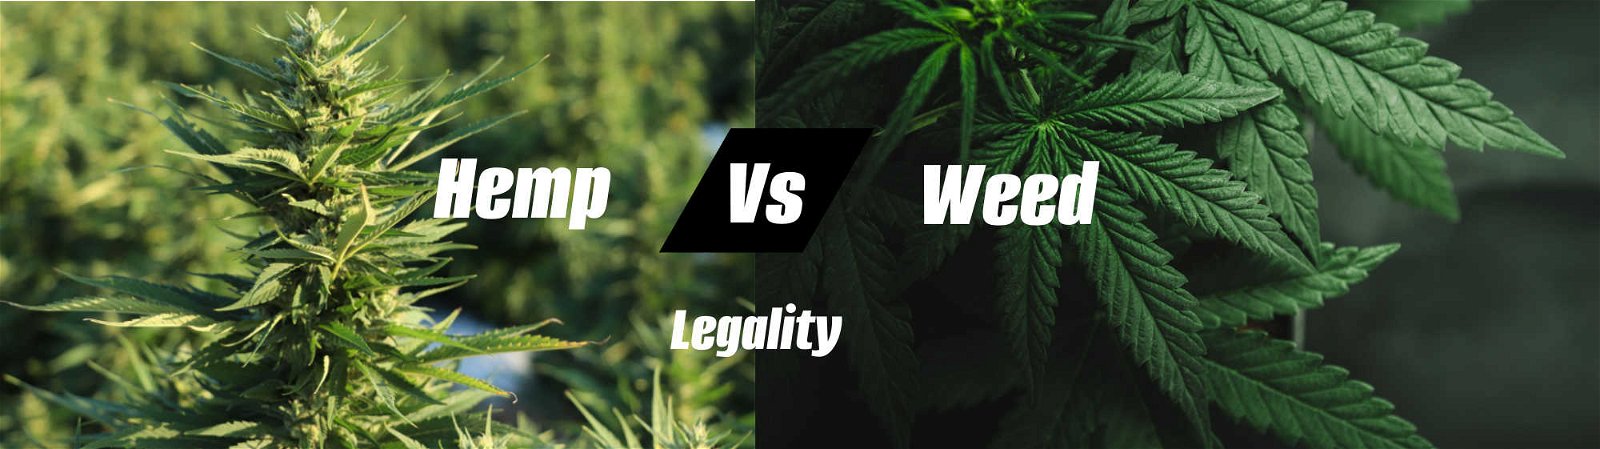 image of hemp vs weed legality